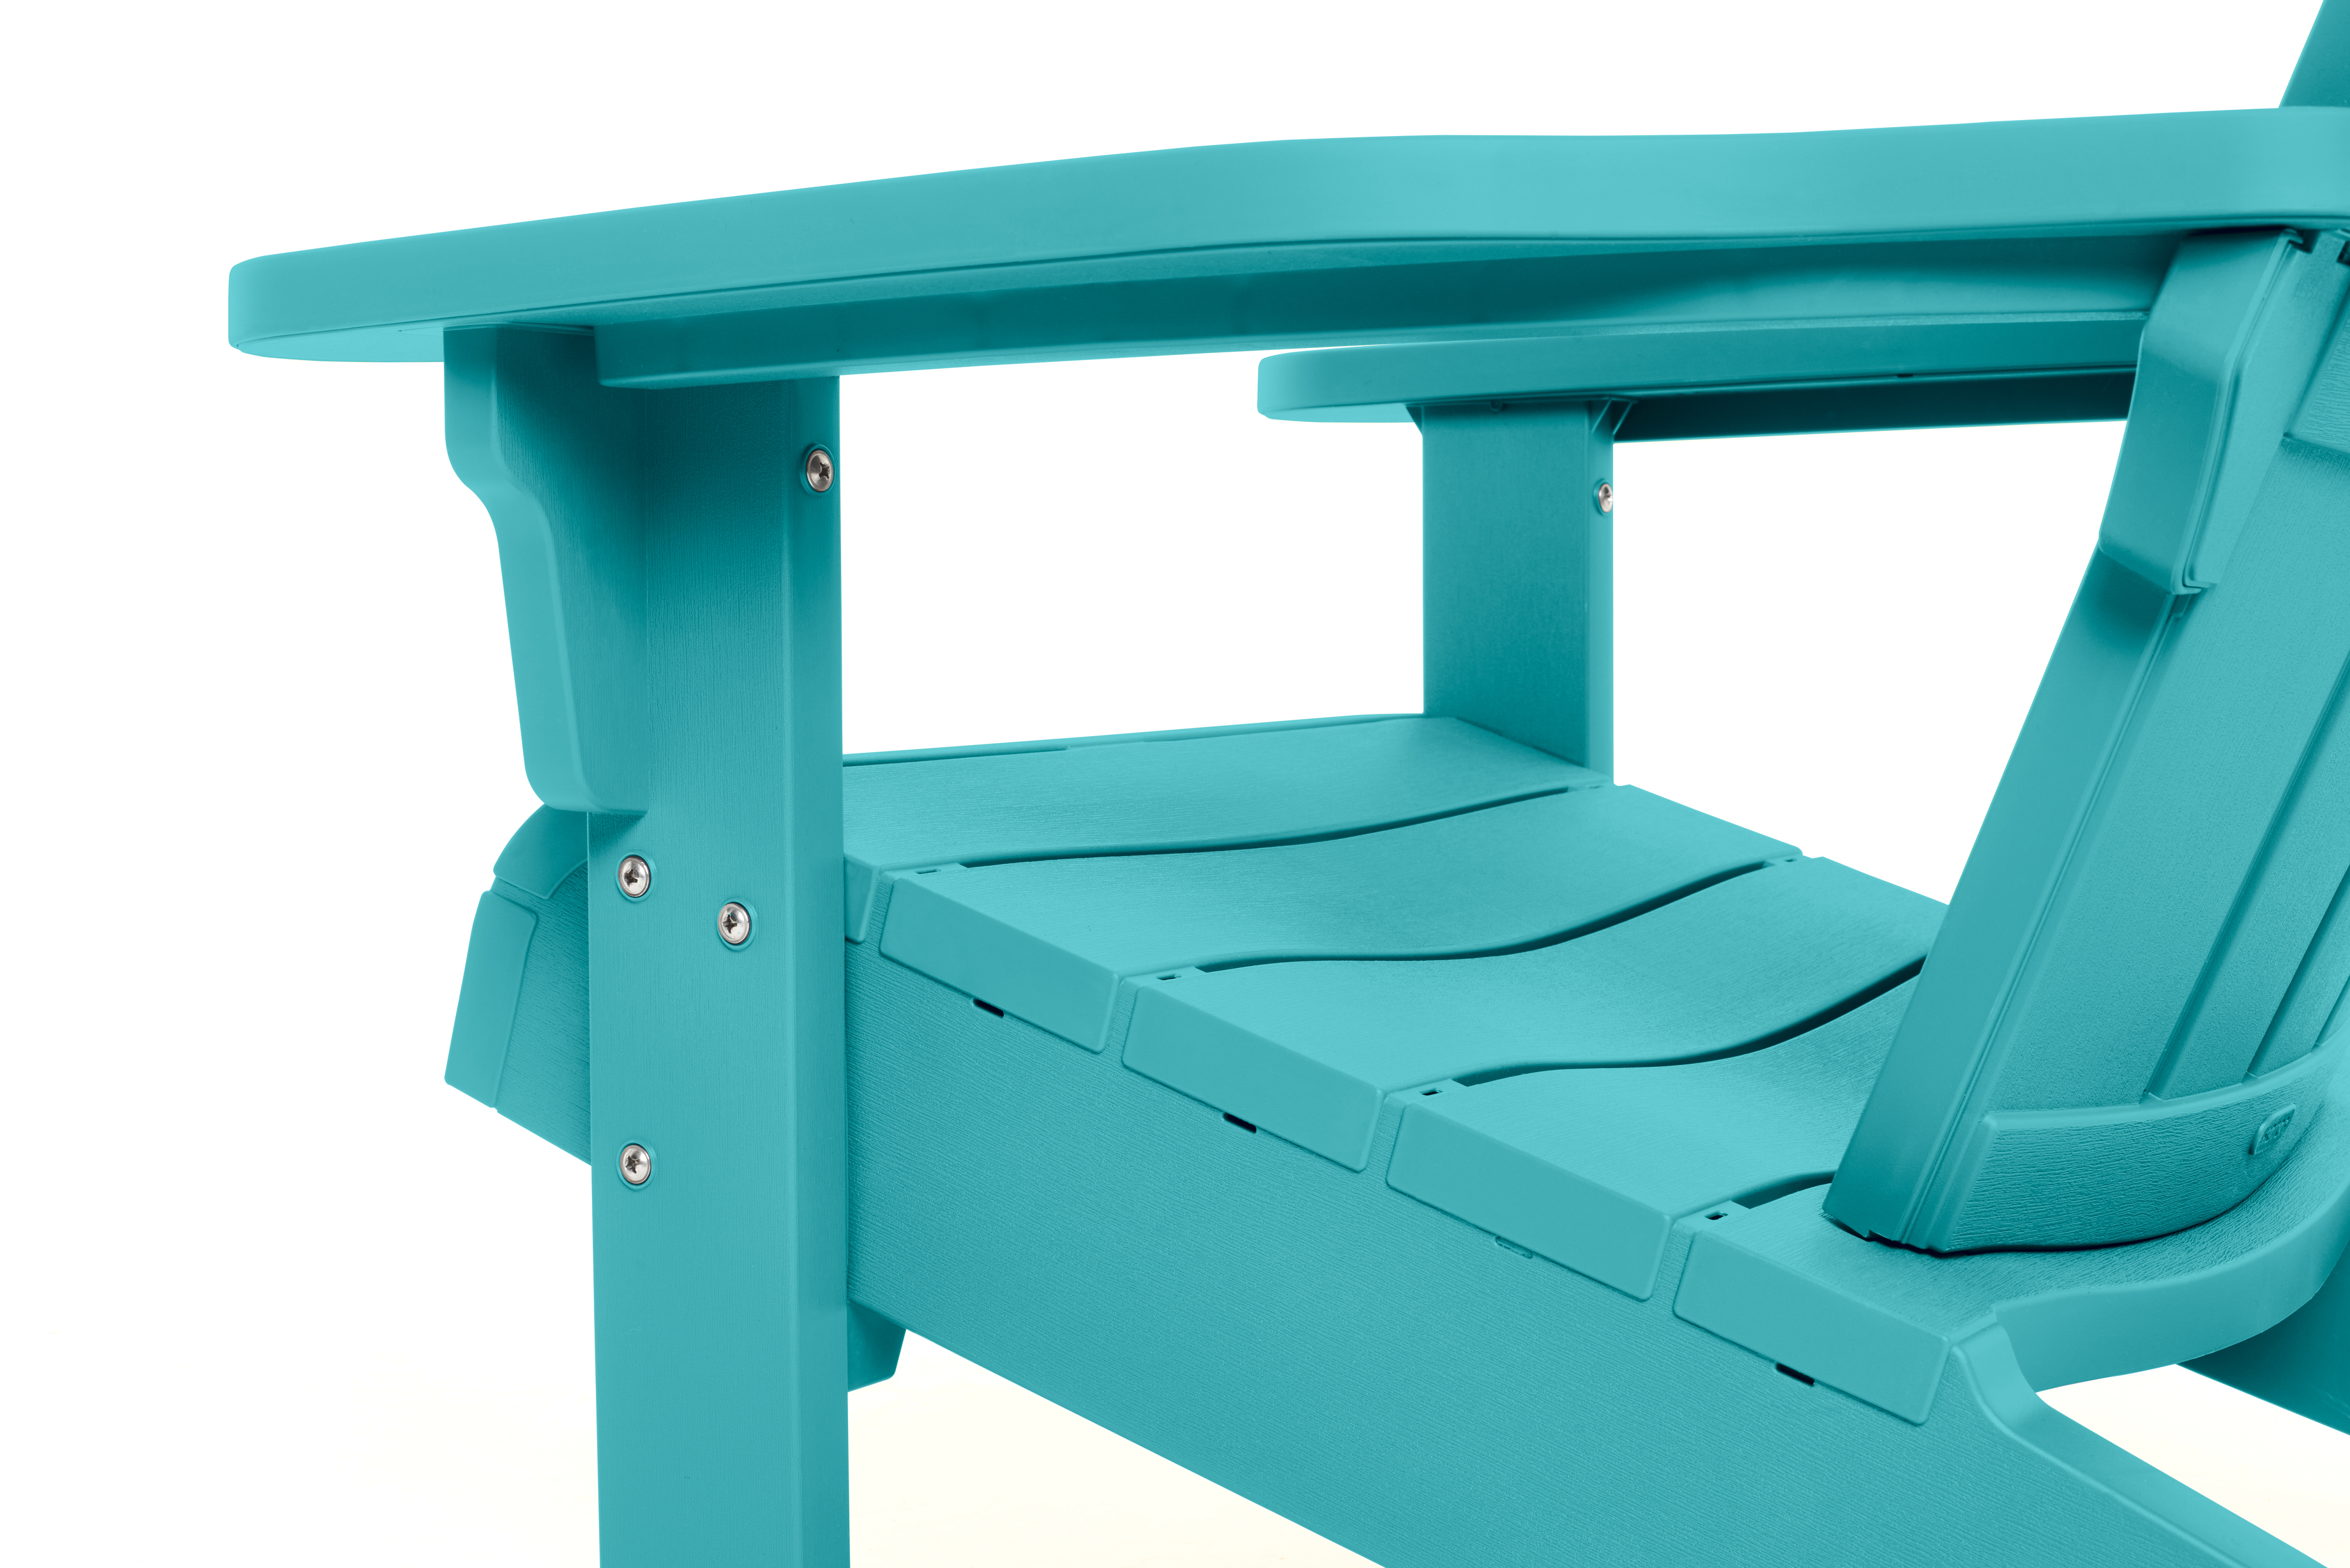 Keter Adirondack Chair, Resin Outdoor Furniture, Teal - image 2 of 7